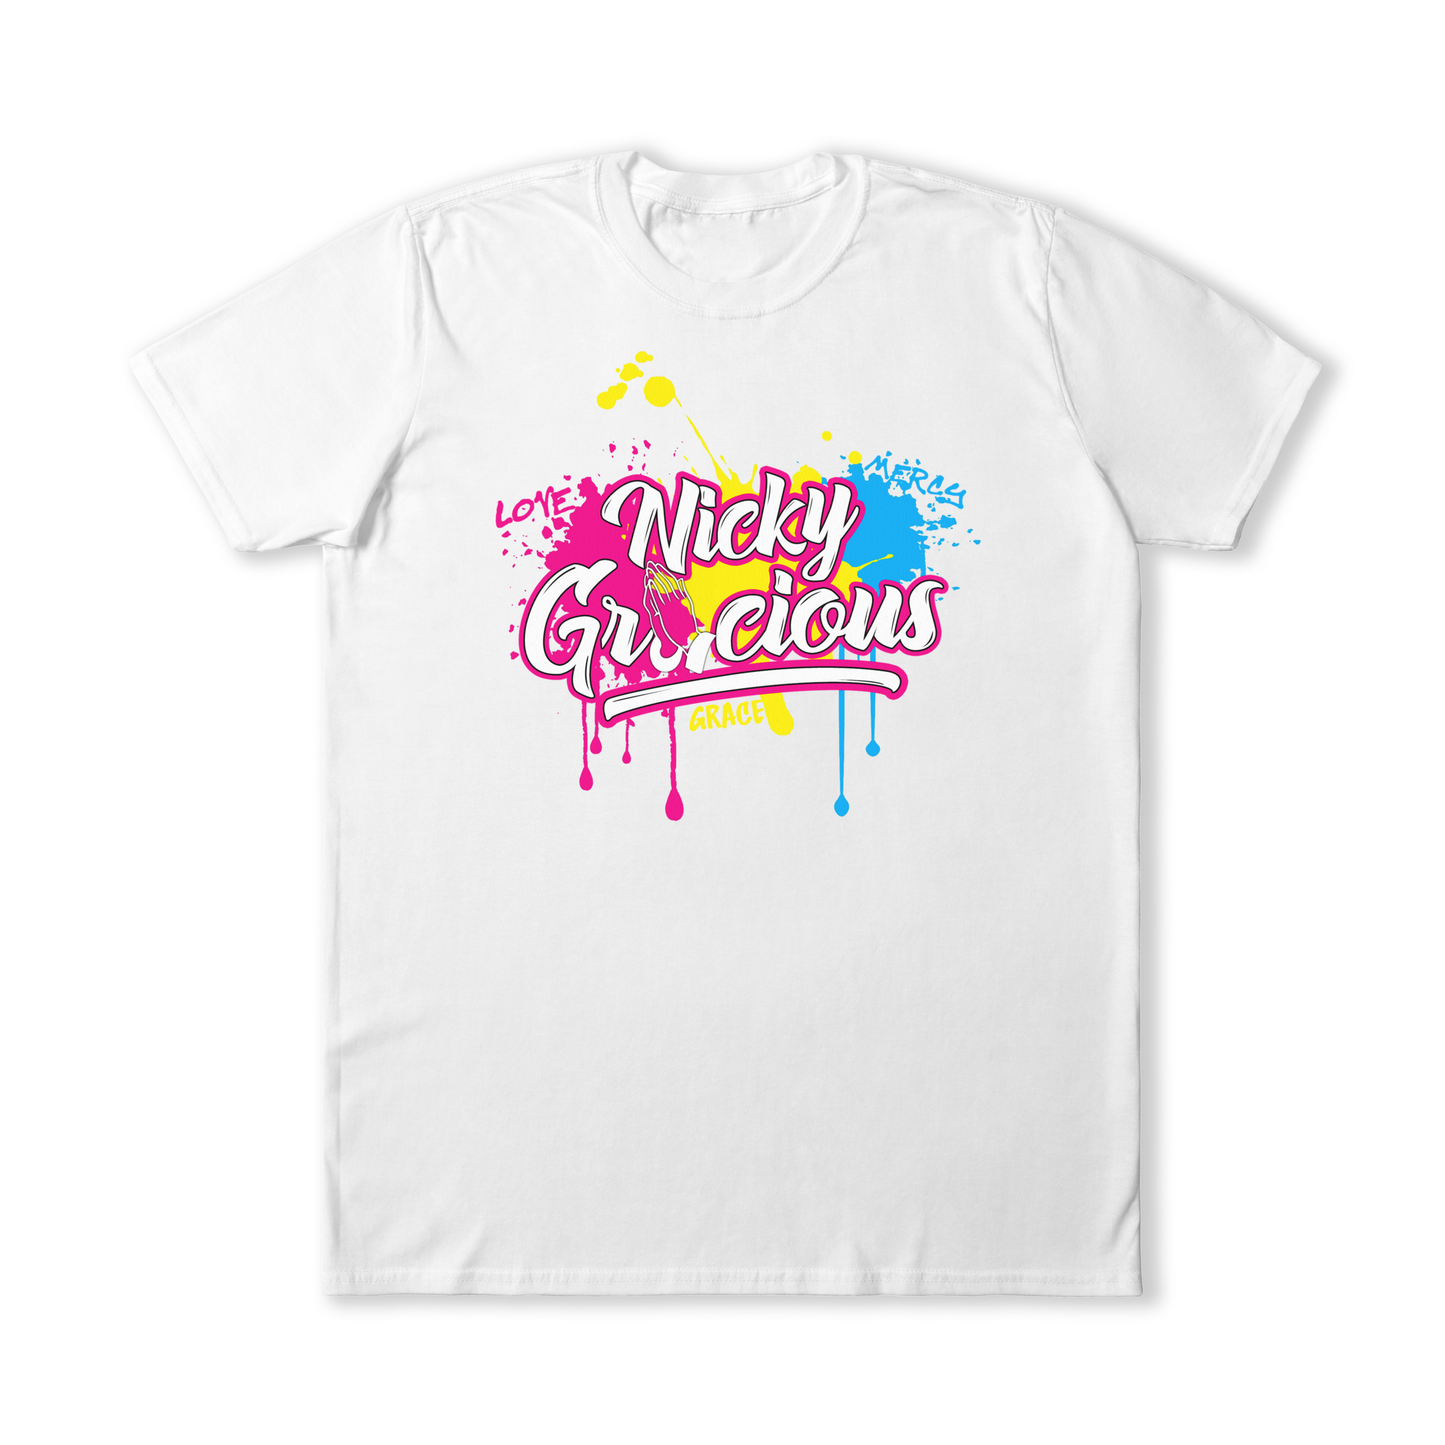 Nicky Gracious Paint Splash T-Shirt